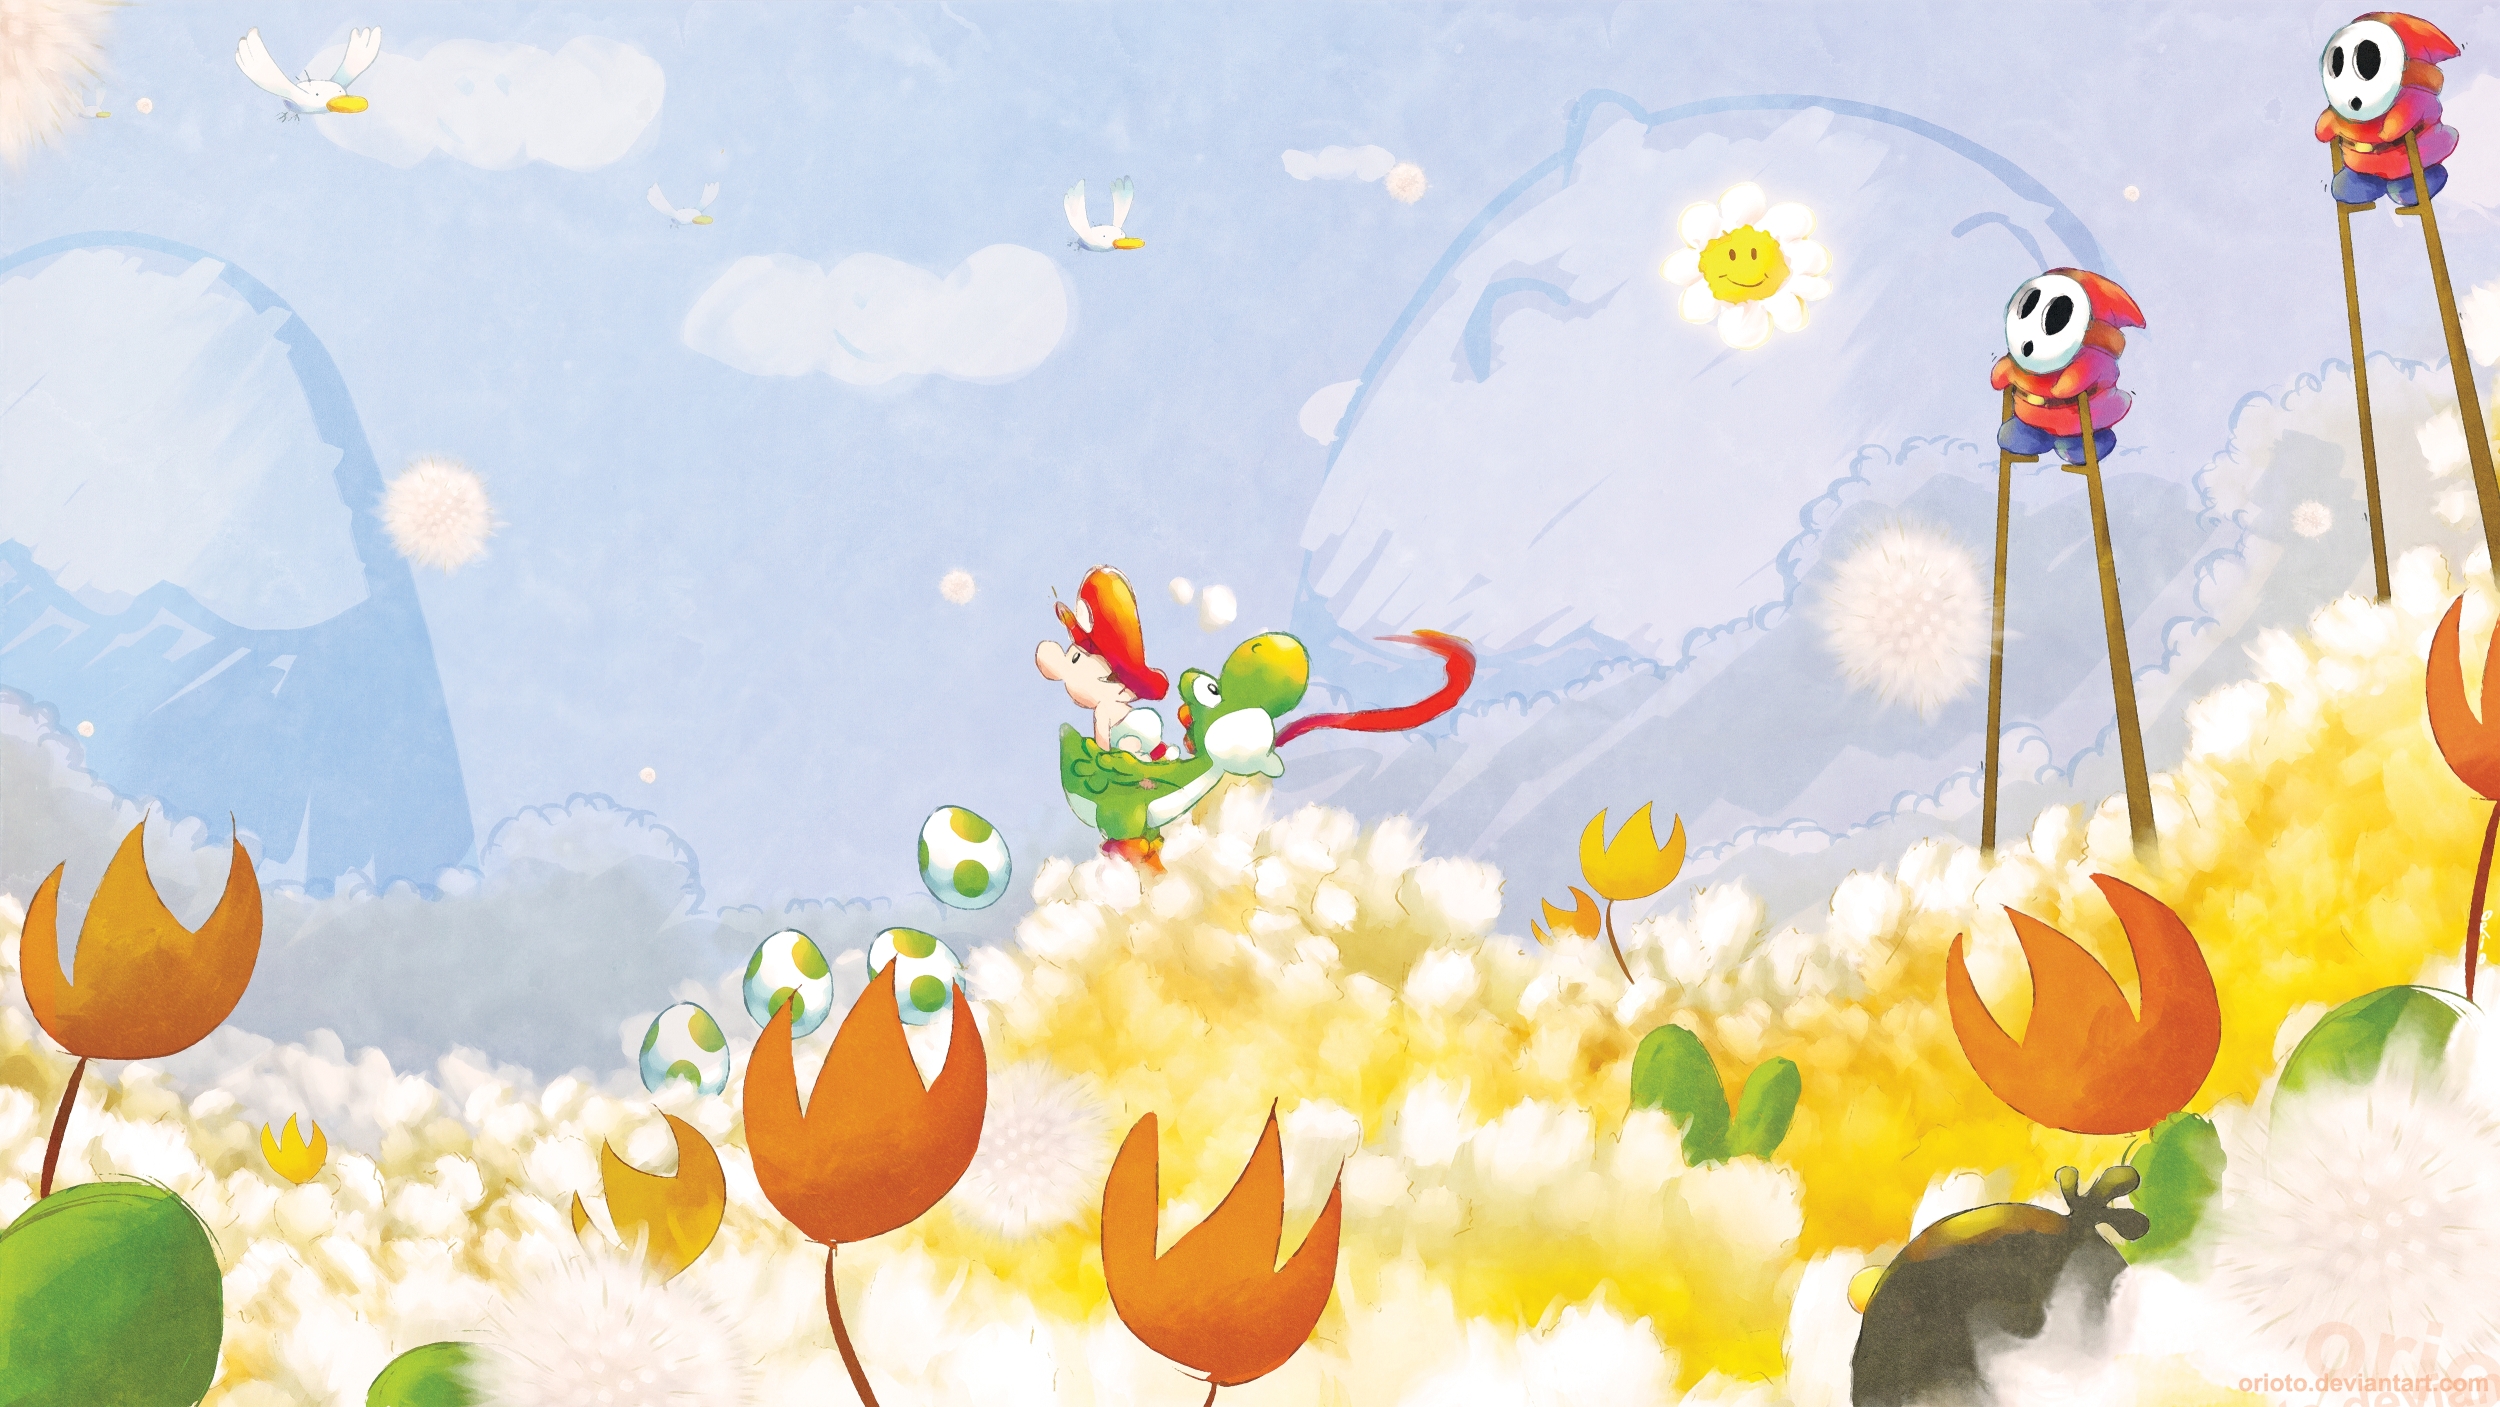 Super Mario World Yoshi S Island HD Wallpaper Background